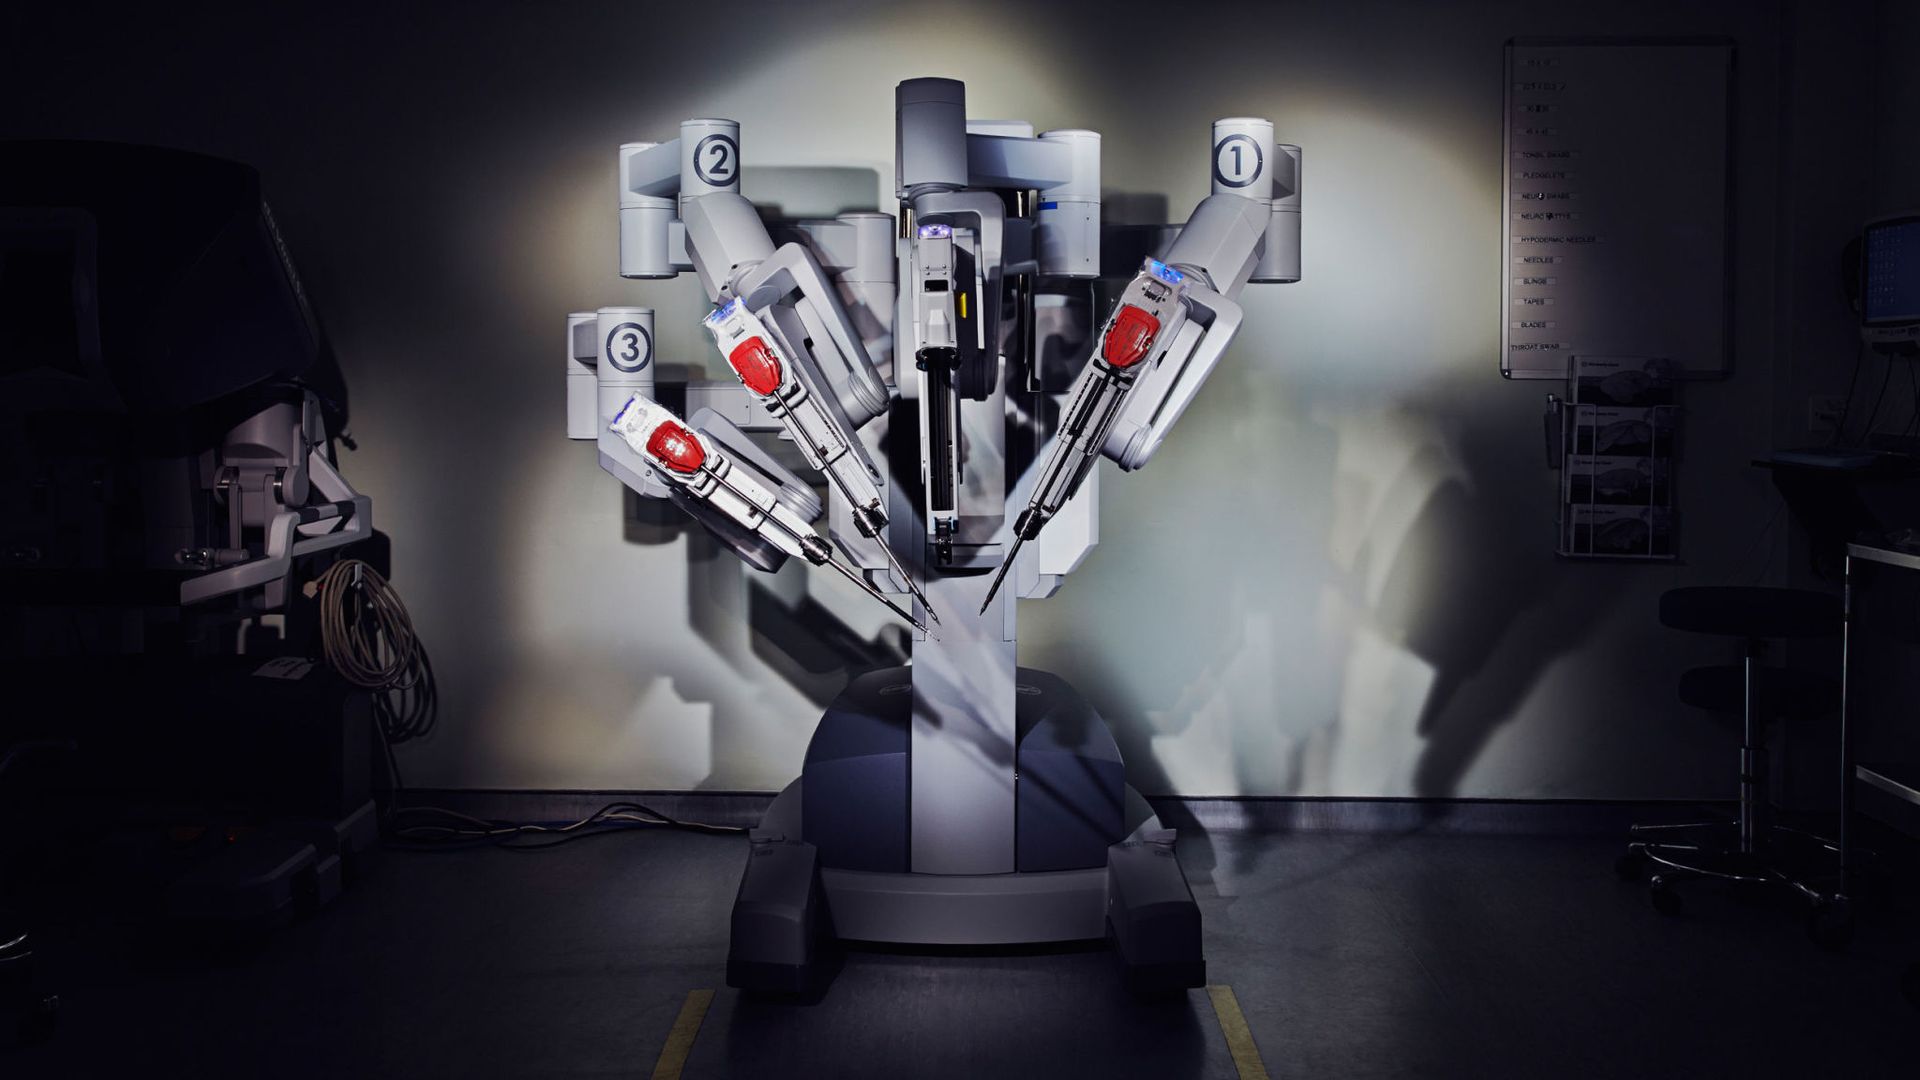 02.01.2013 - the da Vinci robot, designed to facilitate complex surgery using a minimally invasive approach.